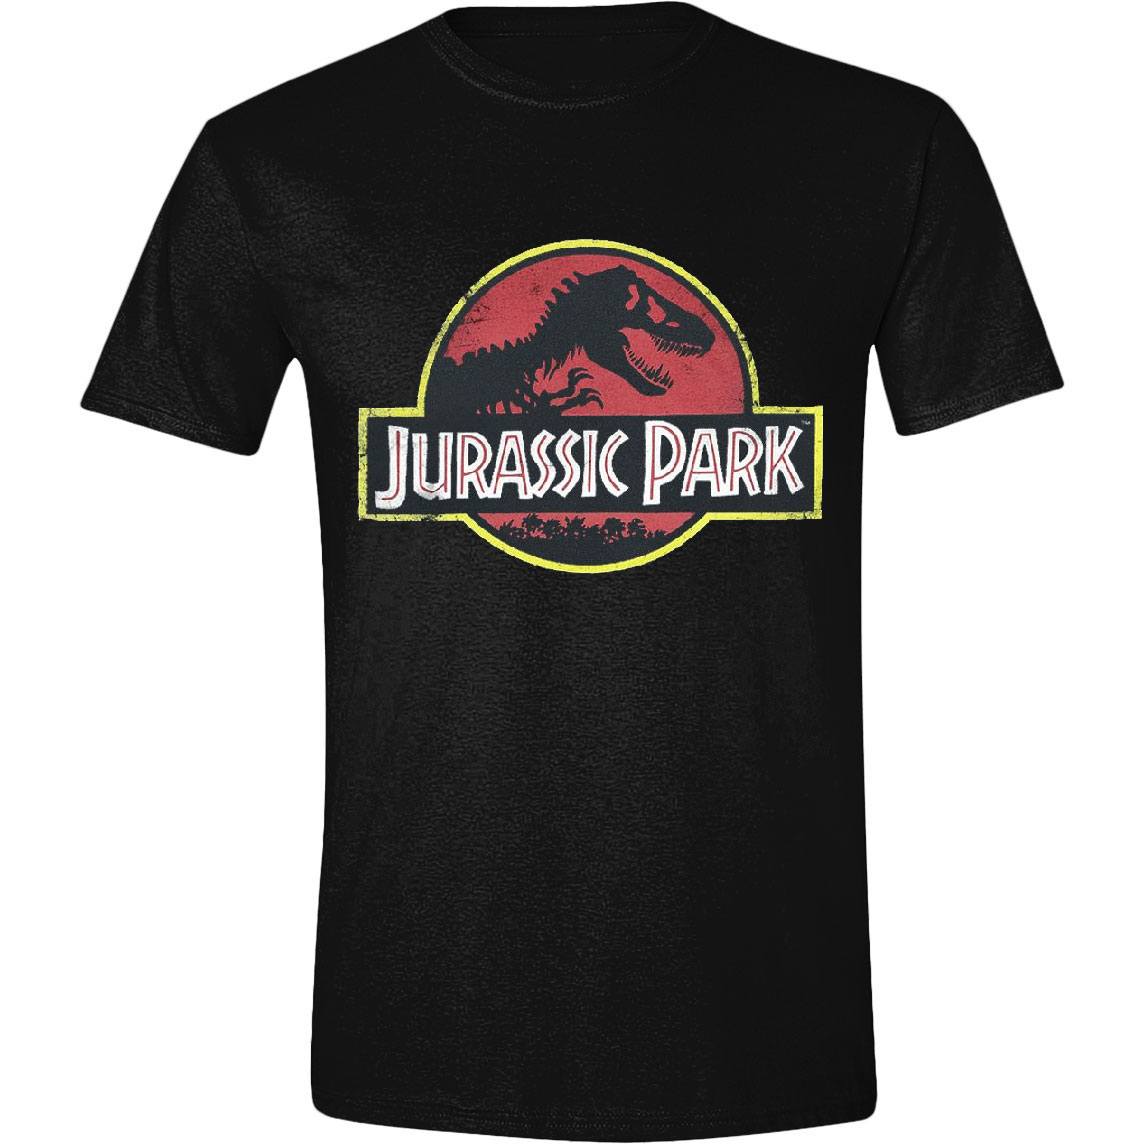 Jurassic Park T-Shirt Classic Logo Size L